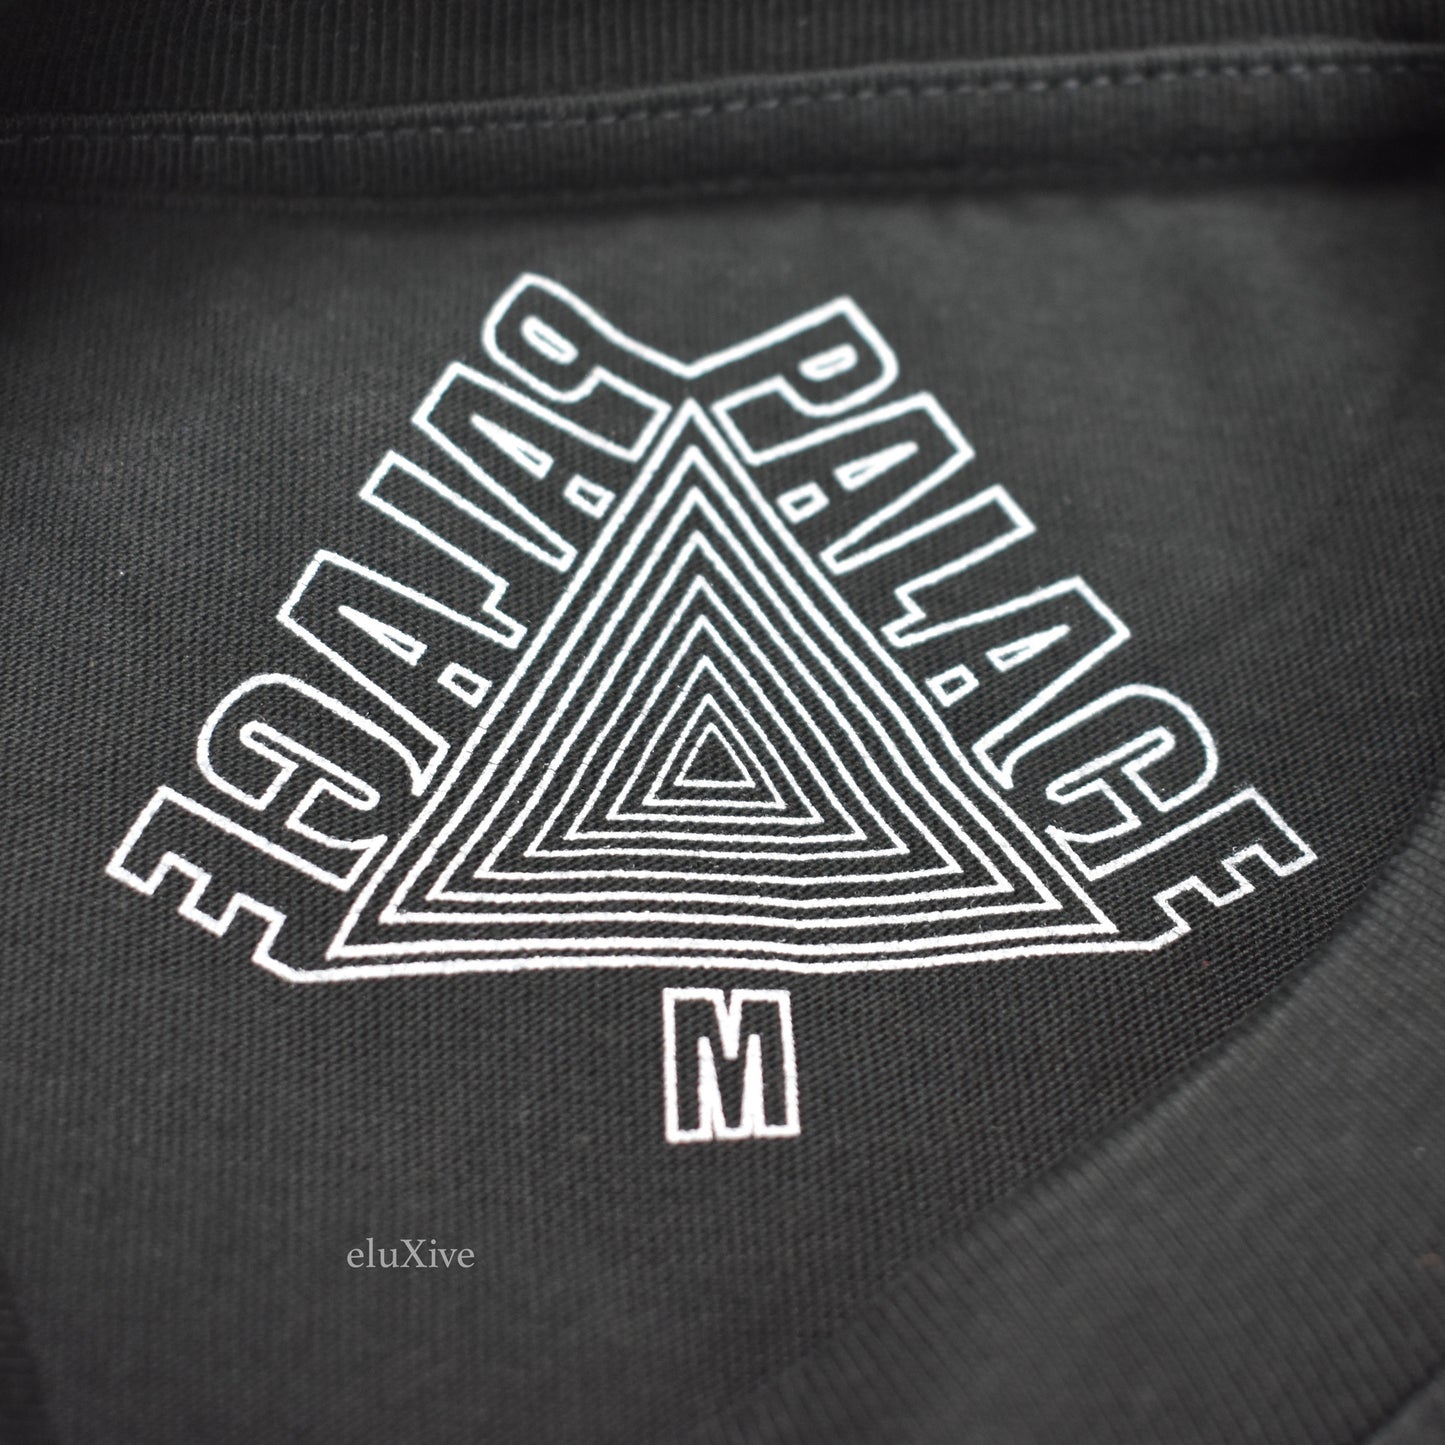 Palace - P-Sprang Pyramid Tri-Ferg Logo T-Shirt (Black)